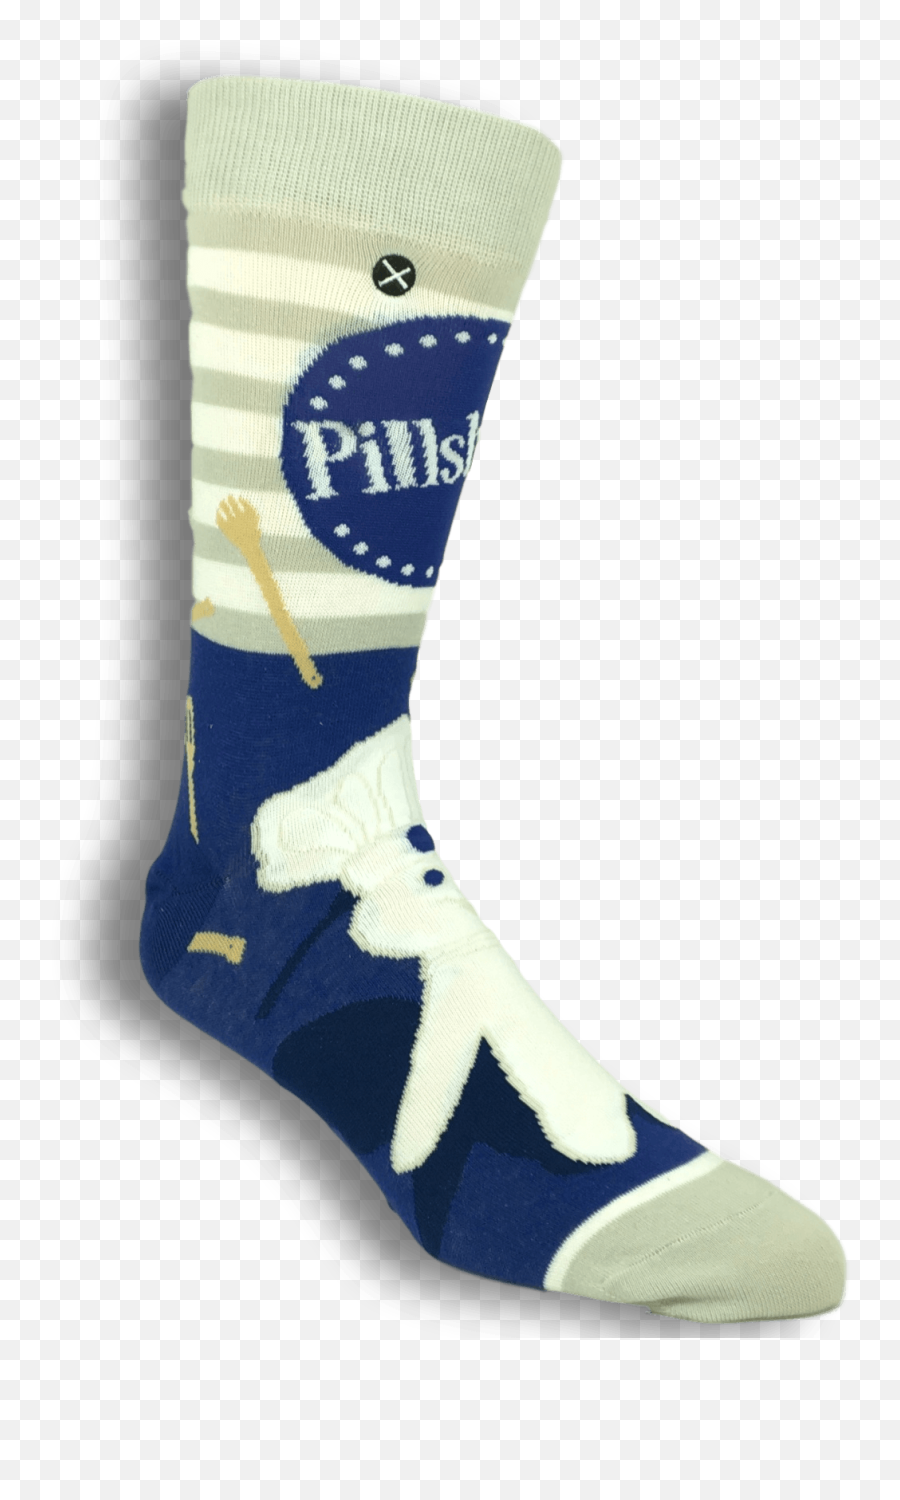 Pillsbury Doughboy Socks By Odd Sox - Unisex Emoji,Odd Sox Emoji Socks